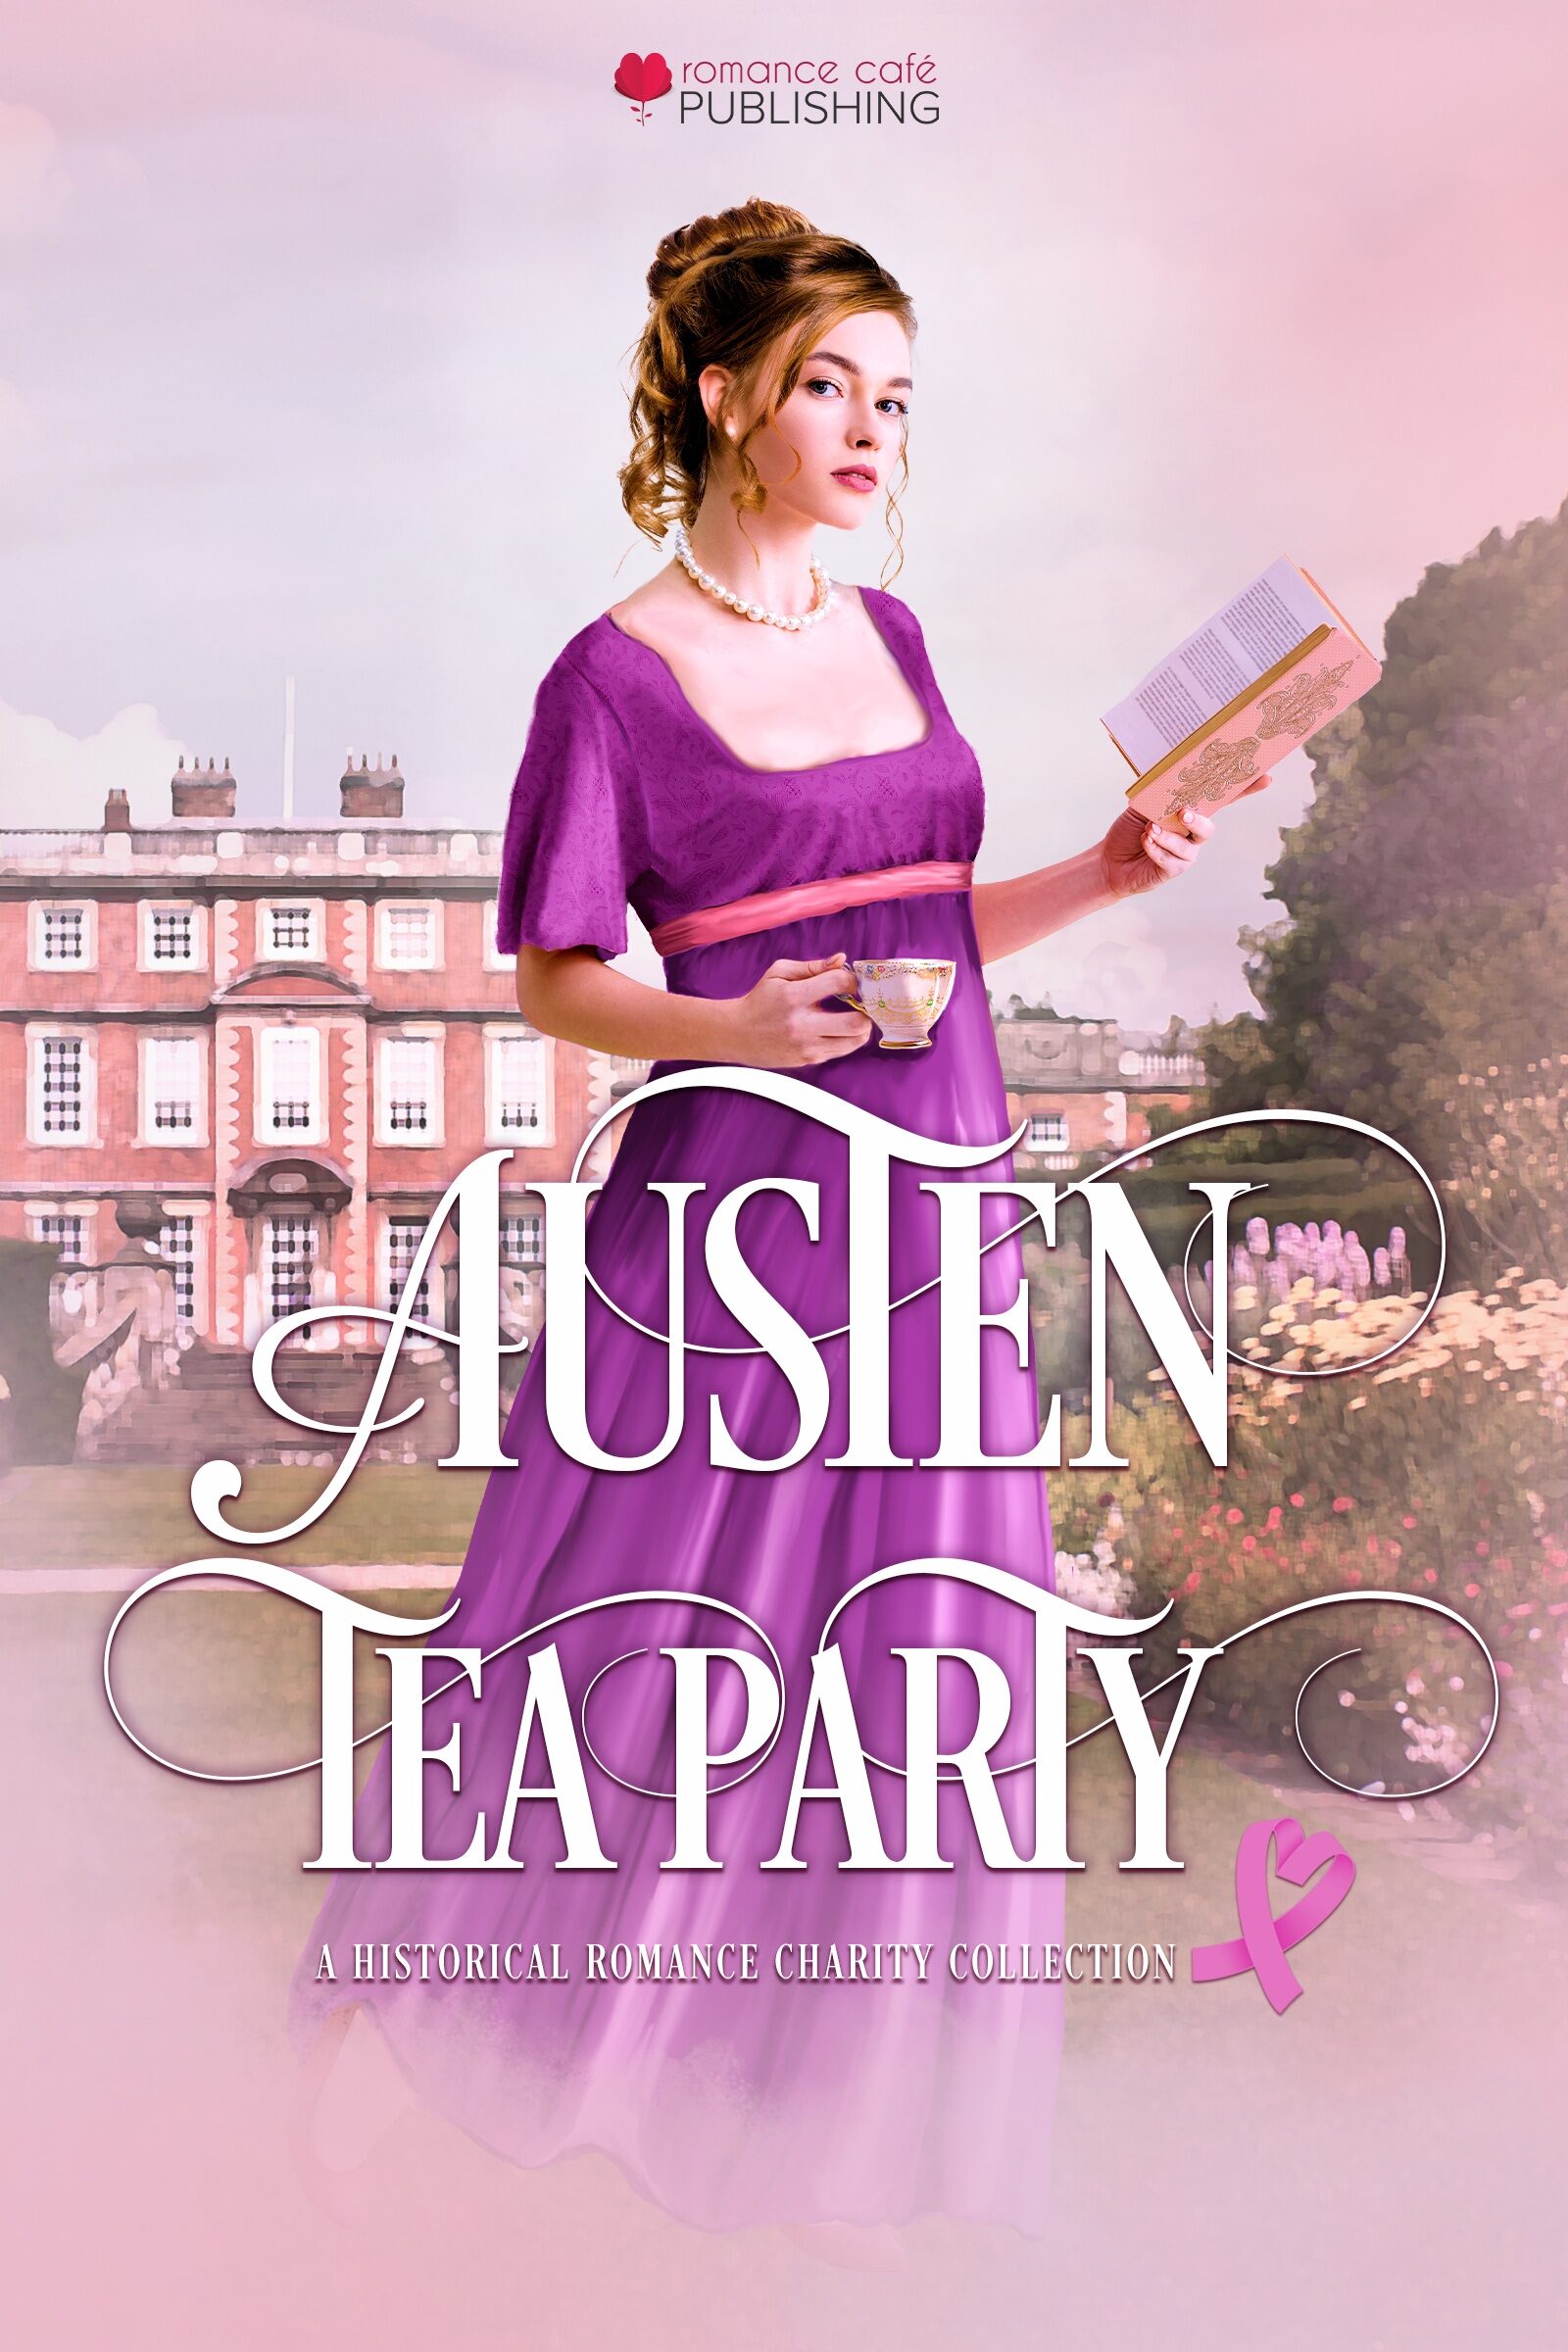 Austen Tea Party